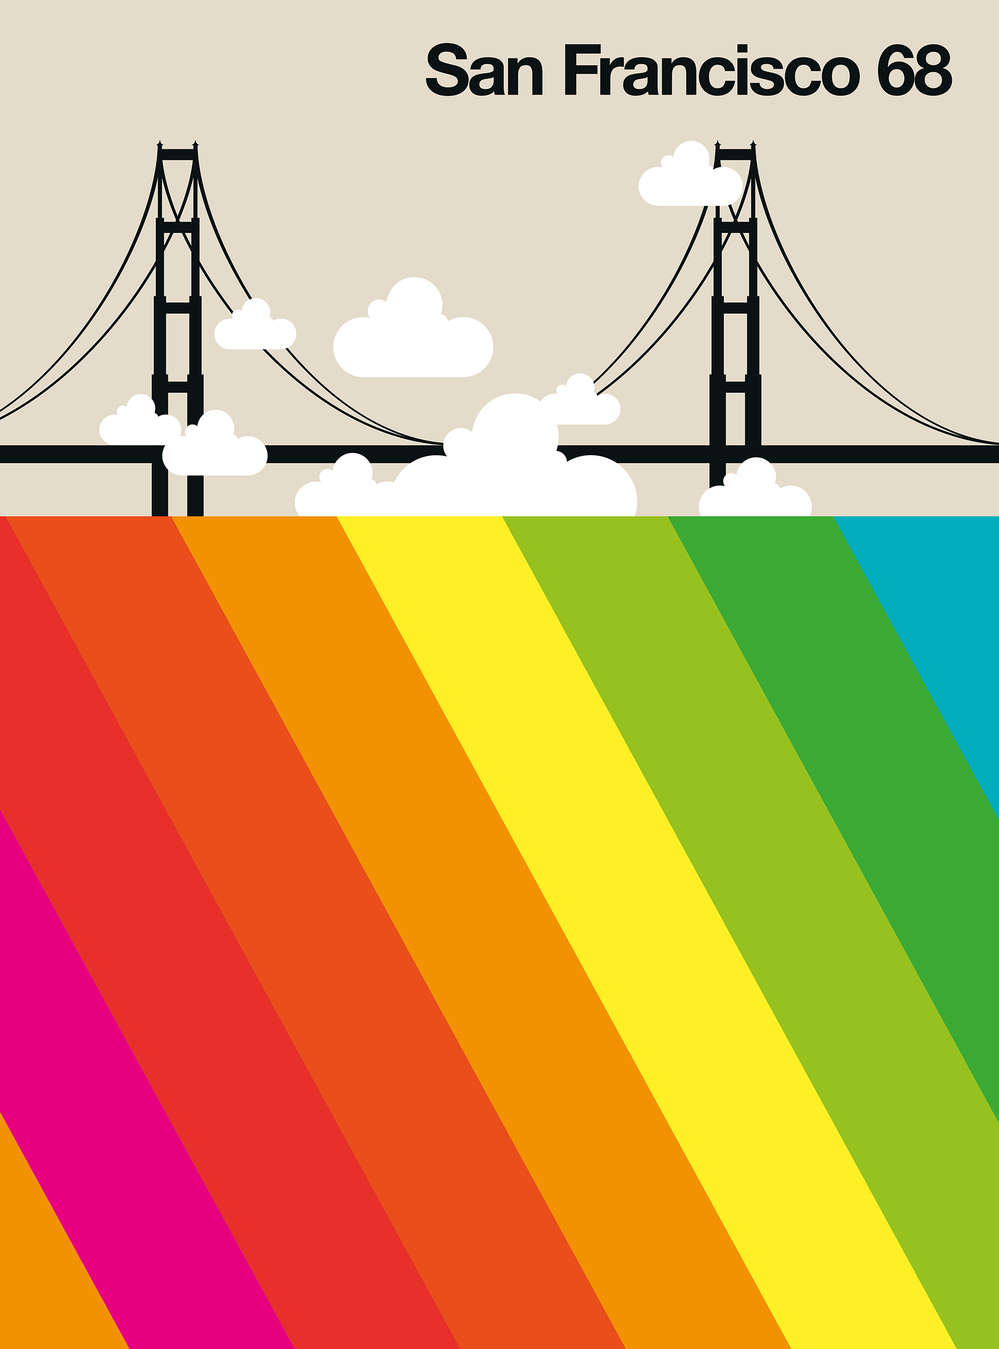             San Francisco 68 mural with Golden Gate Bridge & rainbow
        